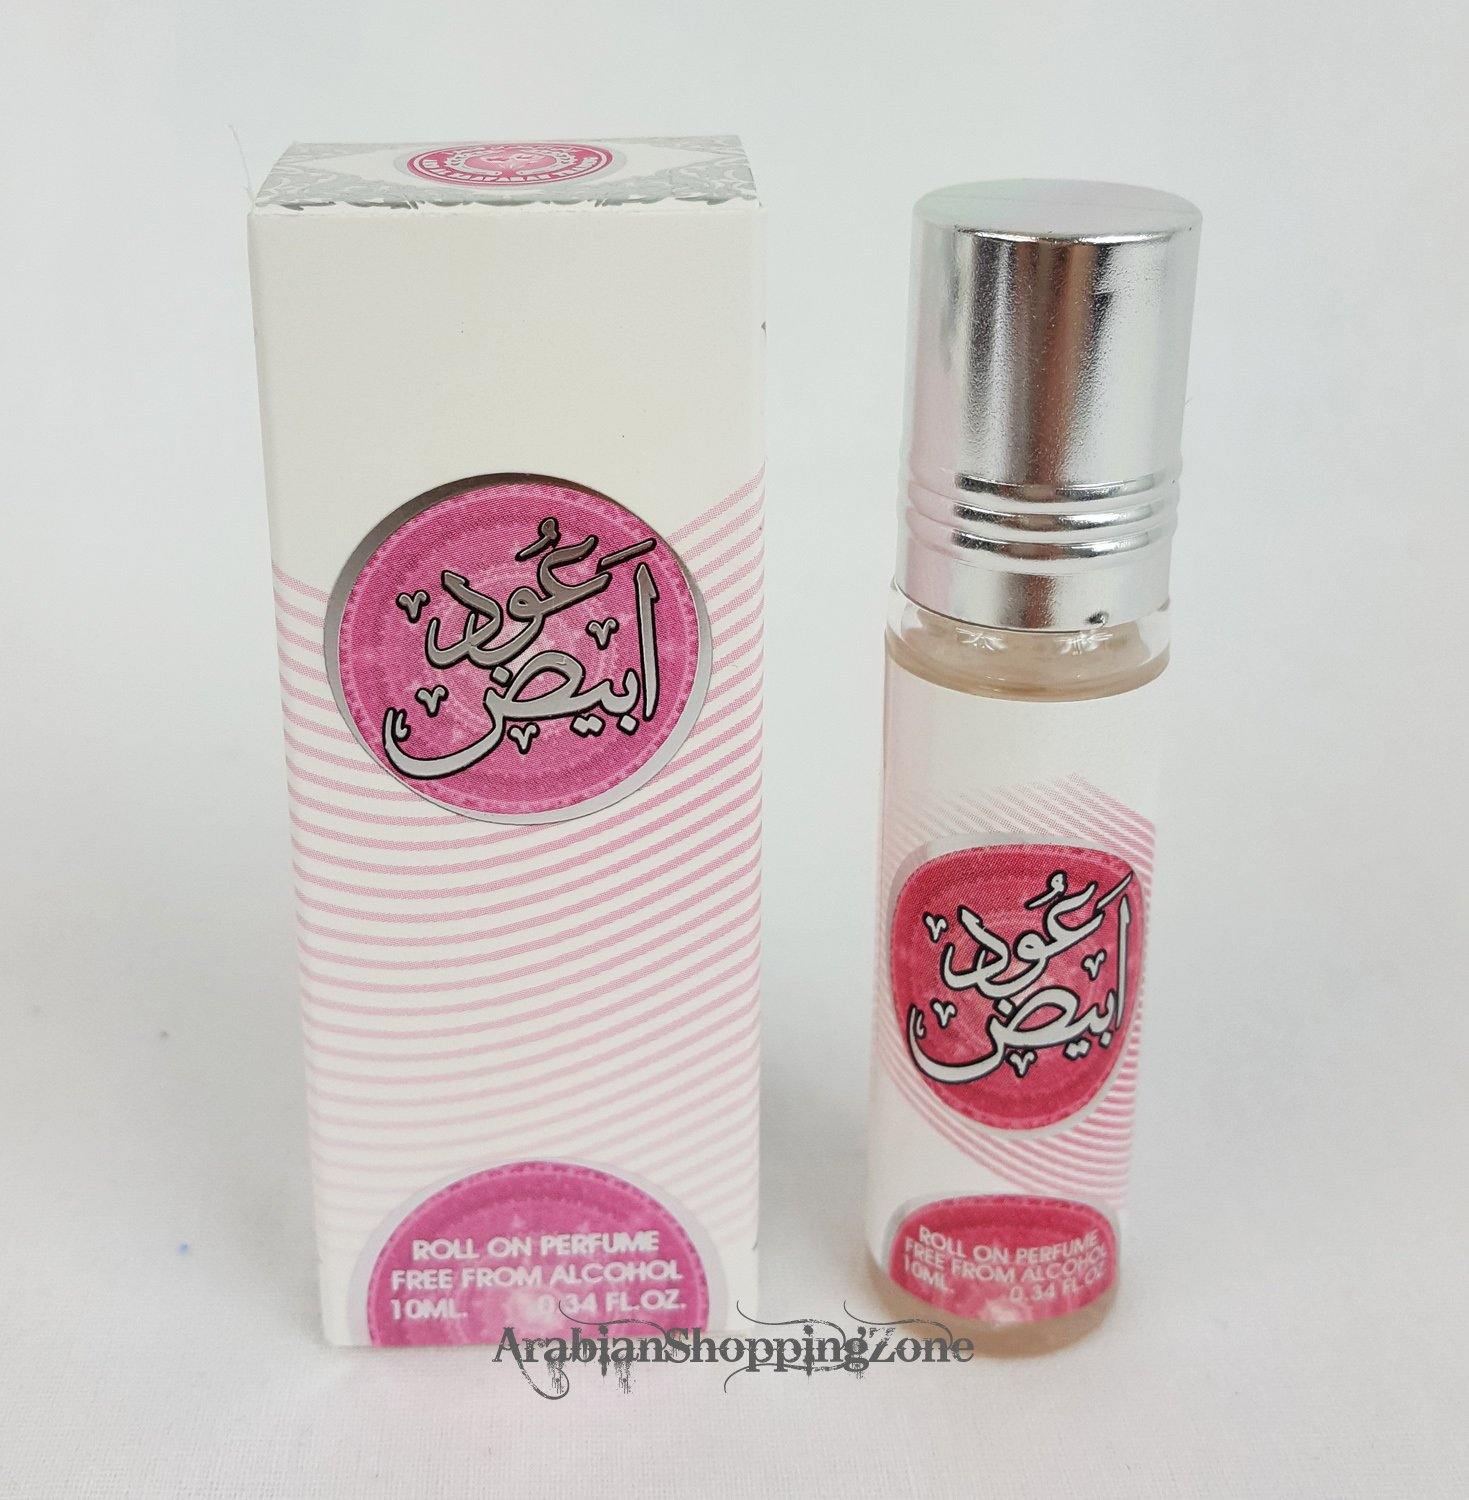 Concentrated Perfume Oil Attar Parfüm Parfum Parfümöl UAE ZAAFARAN Musk/OUD 10ml - Arabian Shopping Zone